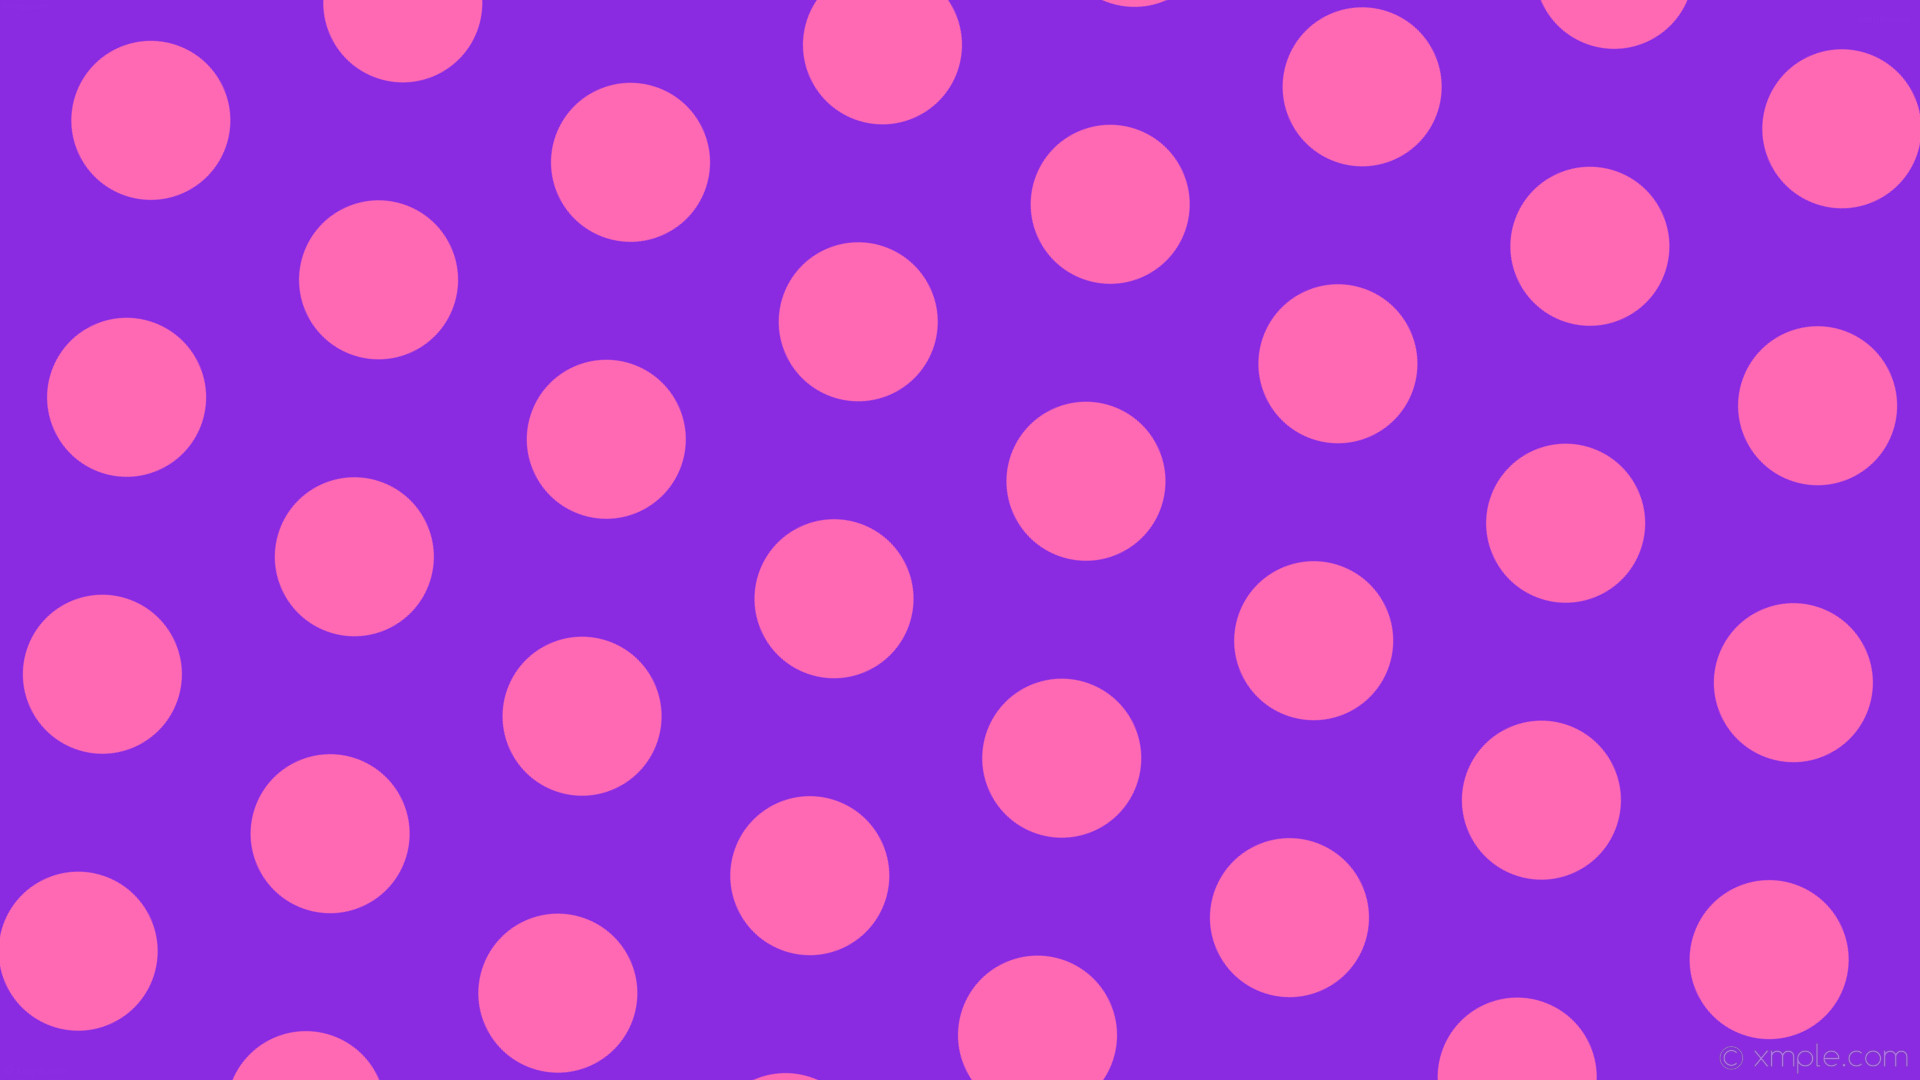 1920x1080 wallpaper hexagon polka pink purple dots blue violet hot pink #8a2be2  #ff69b4 diagonal 25